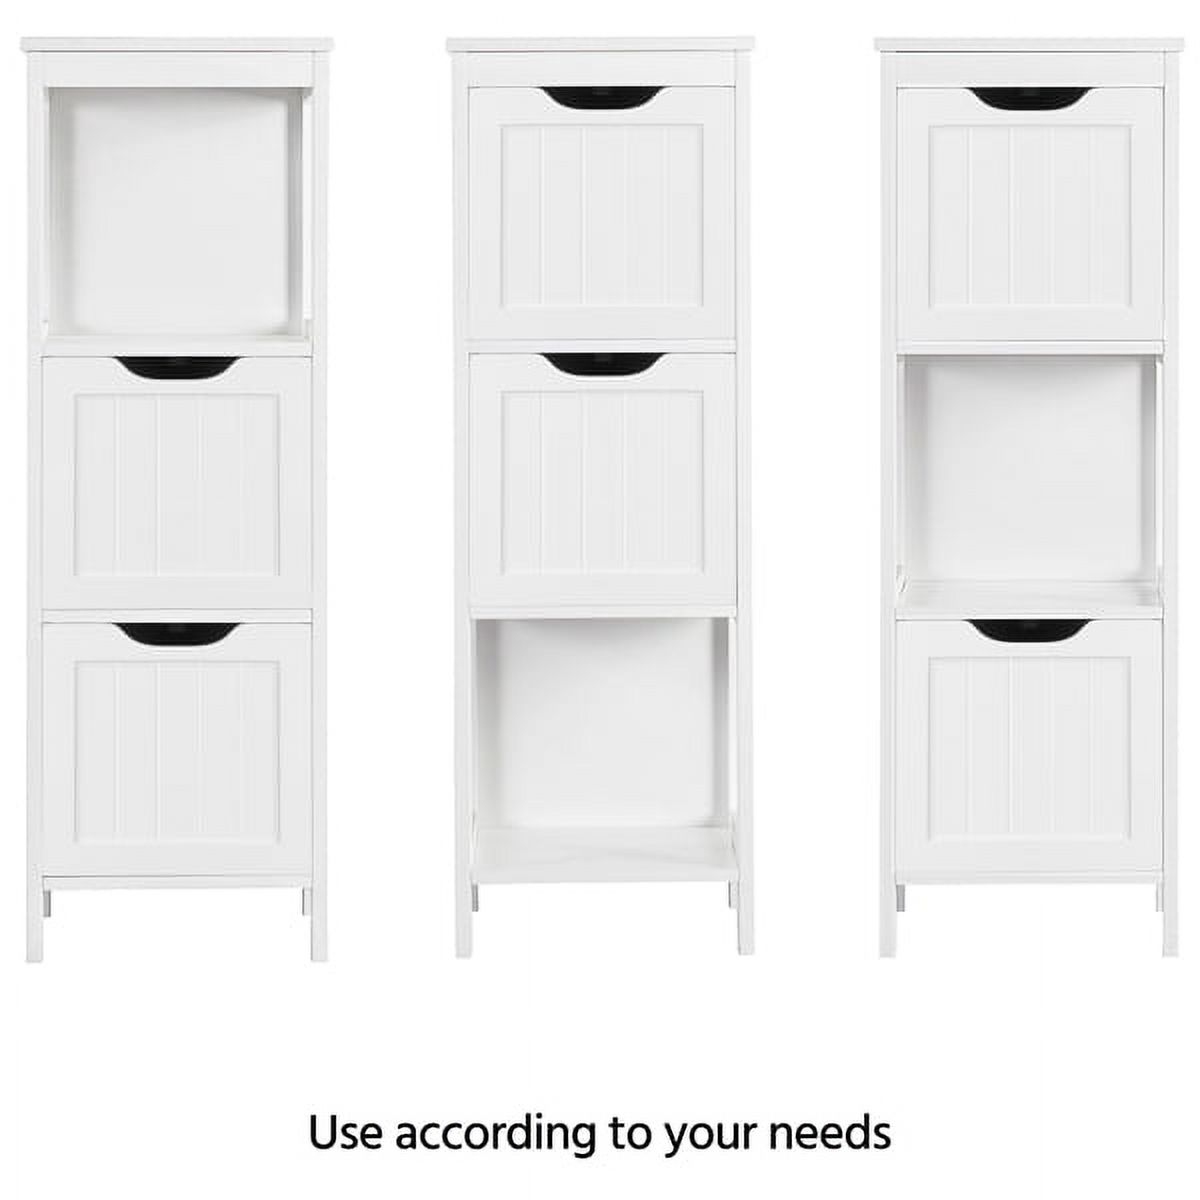 Alden Design Adjustable 3 Tiers Bathroom Cabinet Modern Storage Organizer Heavy Duty Vanity Stylish Floor Cabinet, White - image 4 of 11